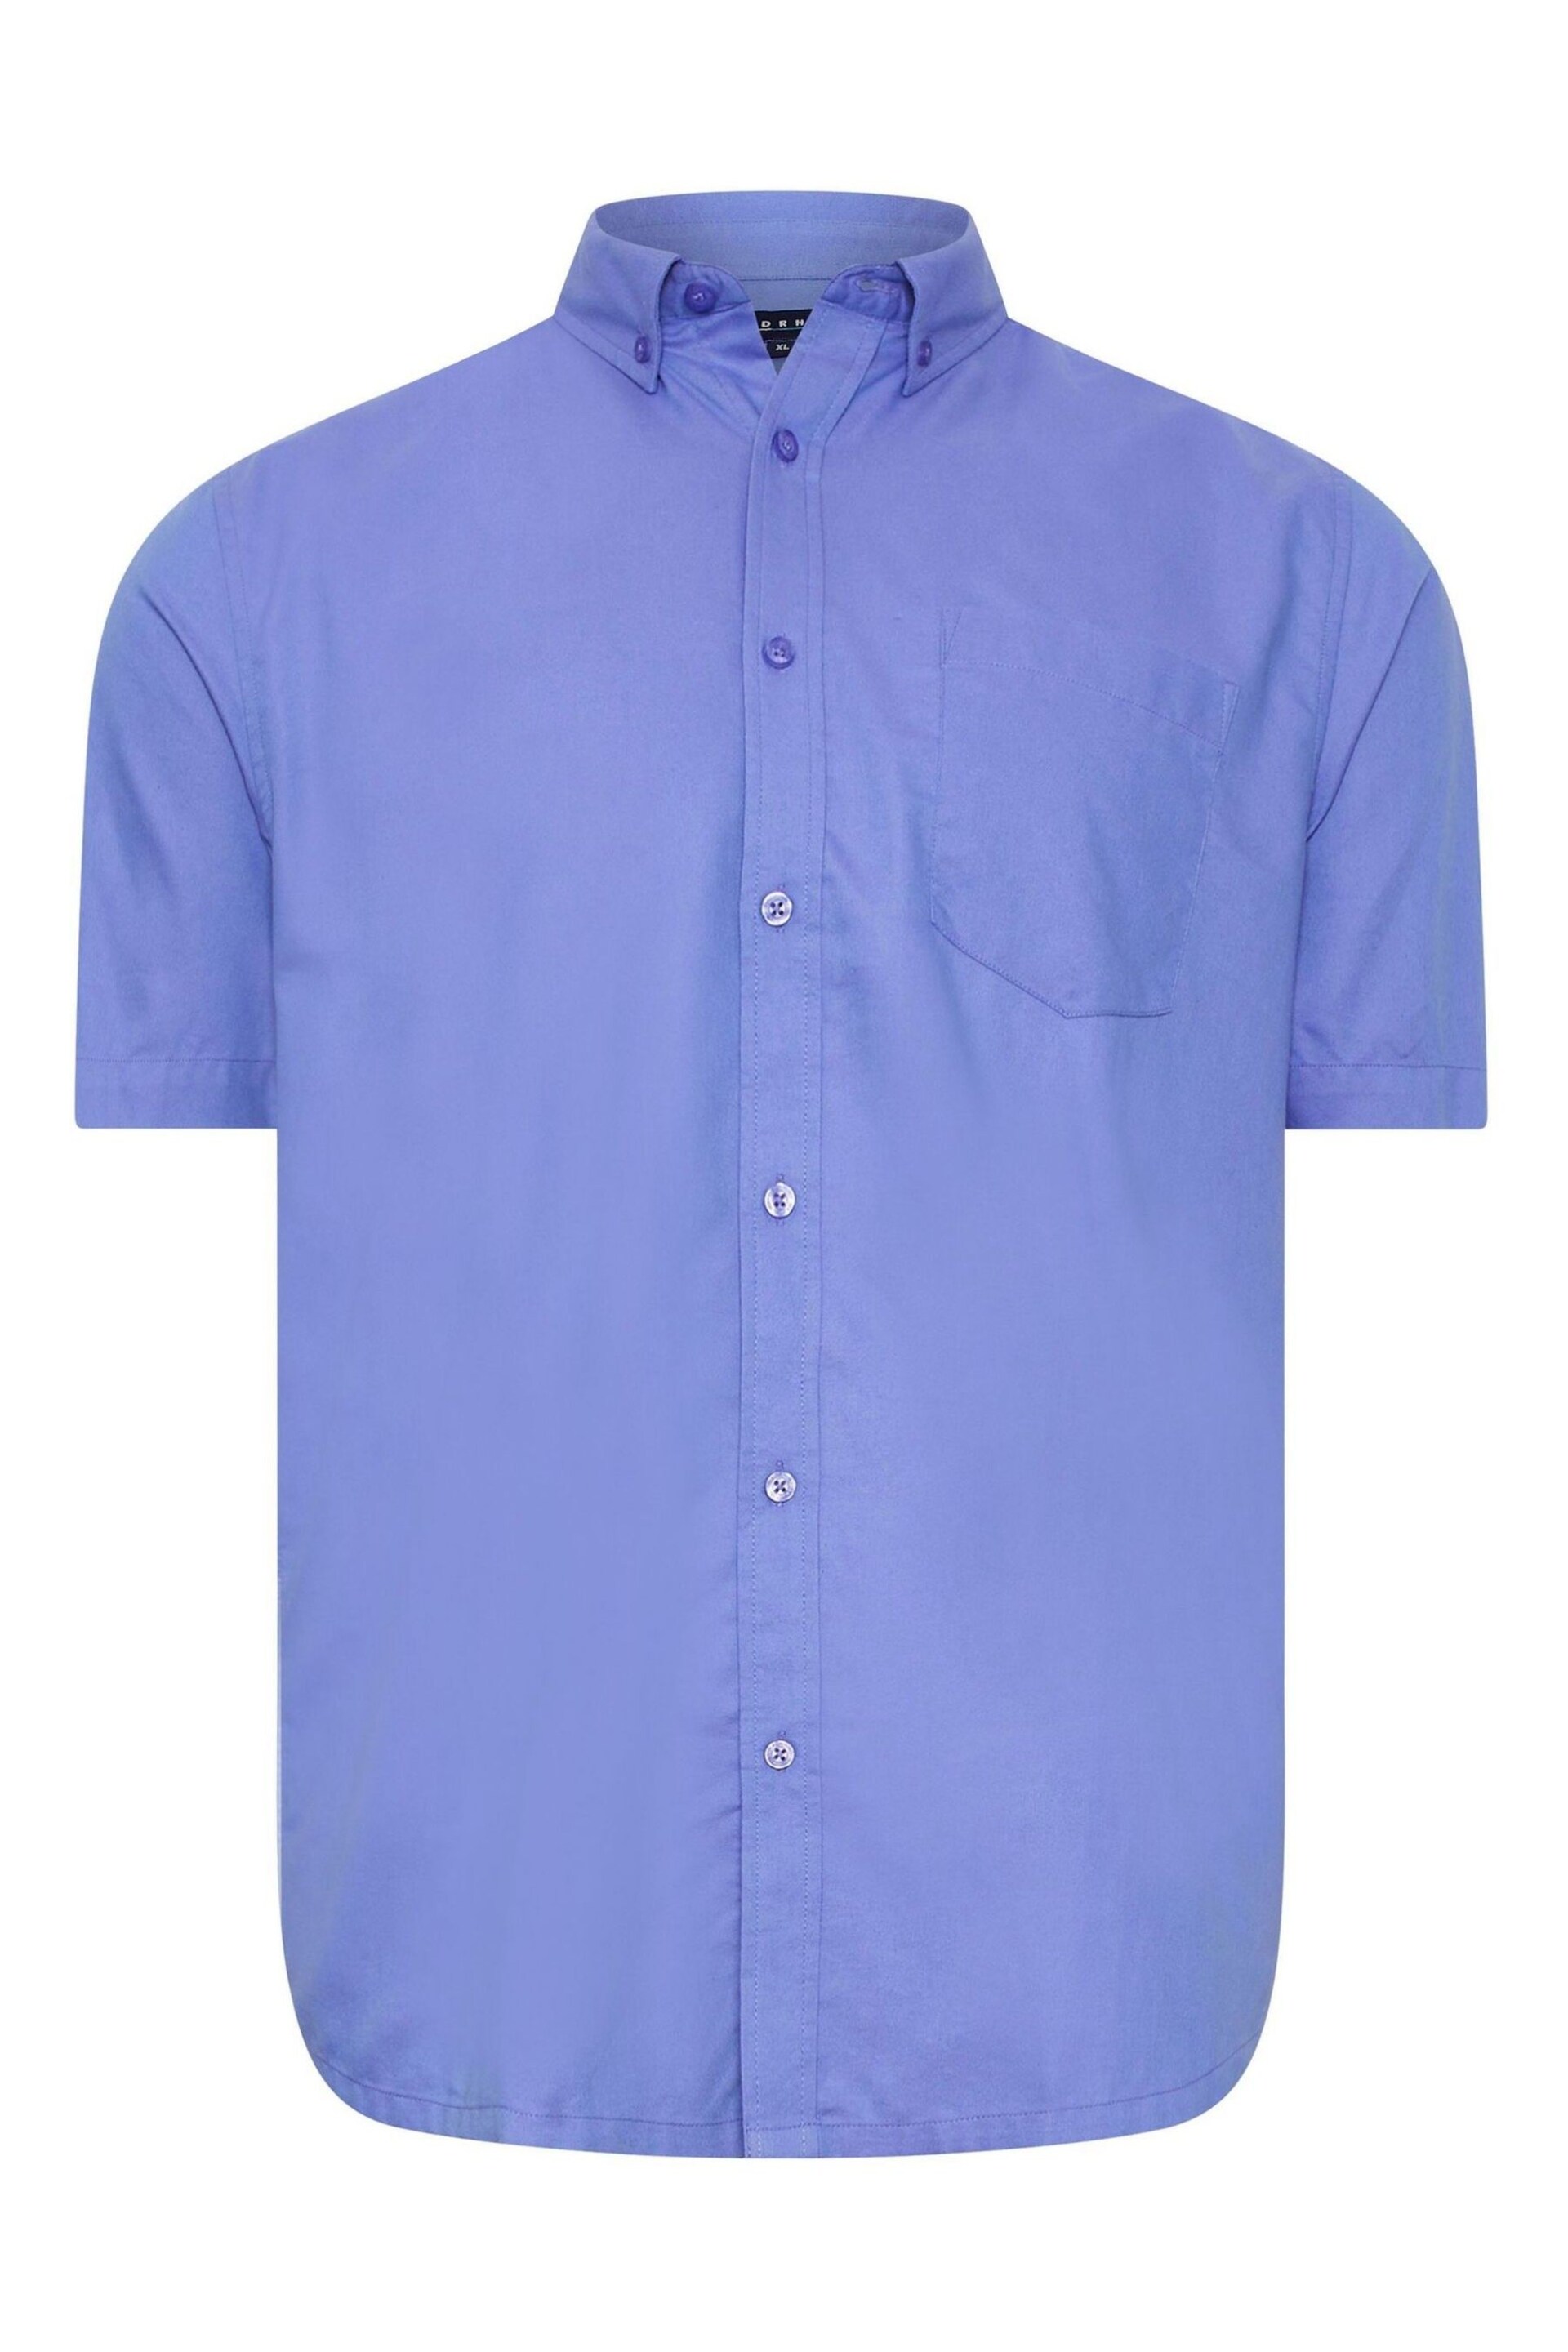 BadRhino Big & Tall Blue Oxford Weave Short Sleeve Shirt - Image 2 of 3